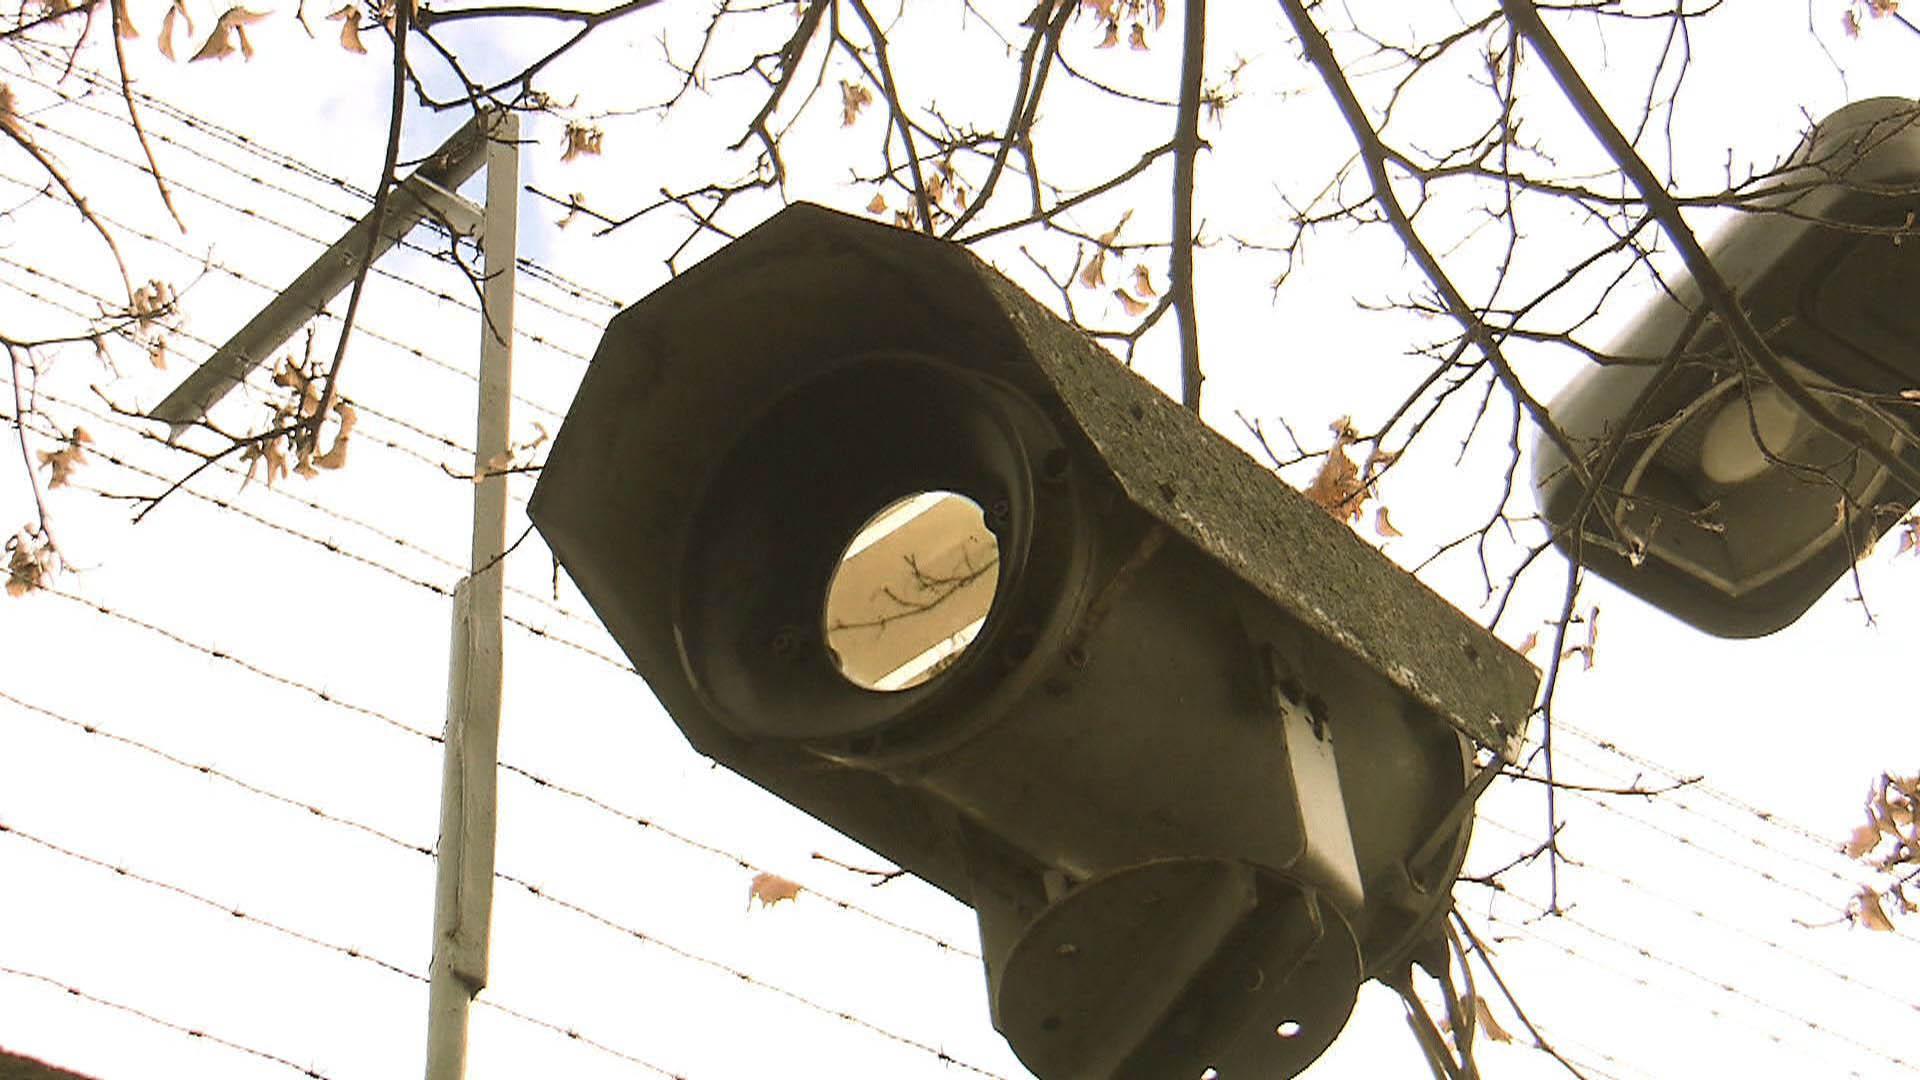 Security Camera at the Berlin Wall